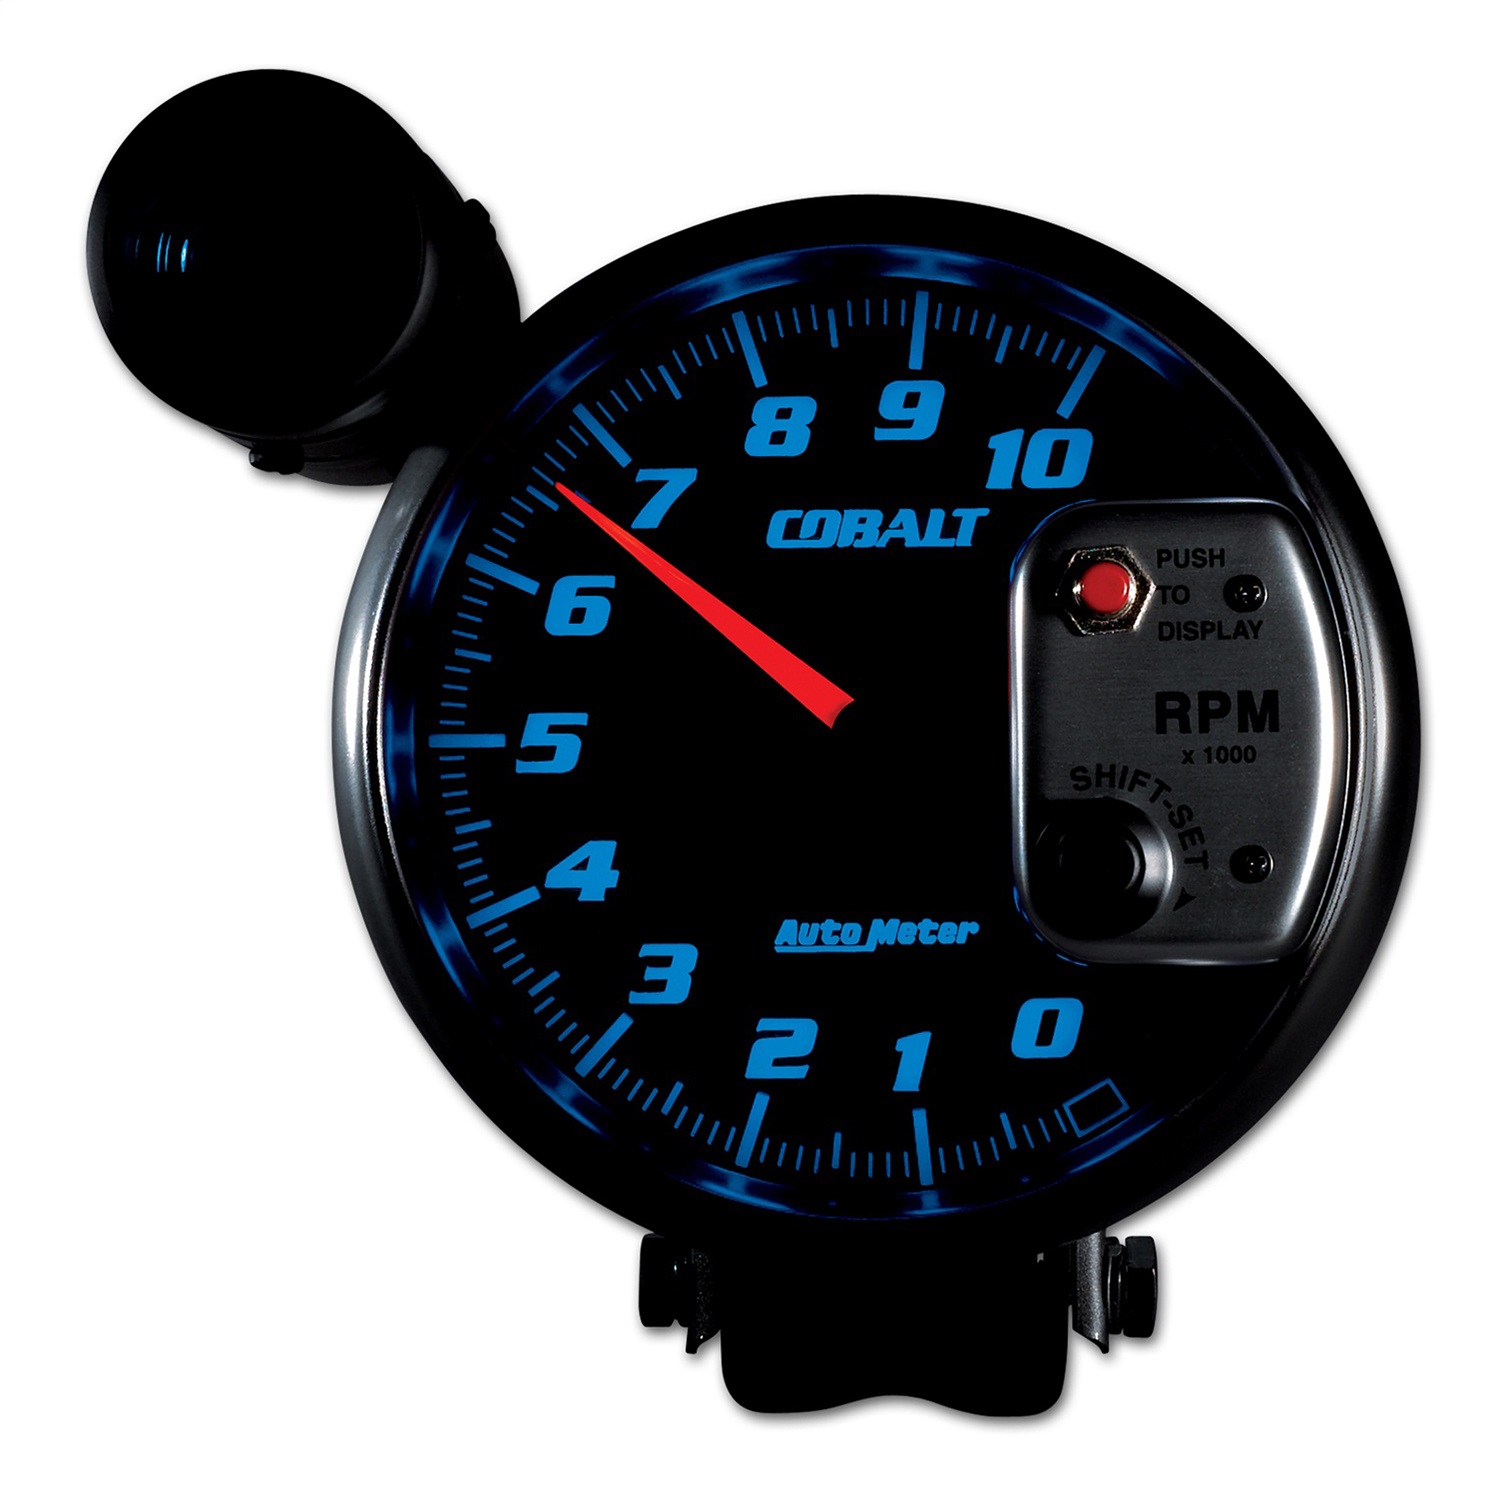 AutoMeter 6299 Cobalt Shift-Lite Tachometer